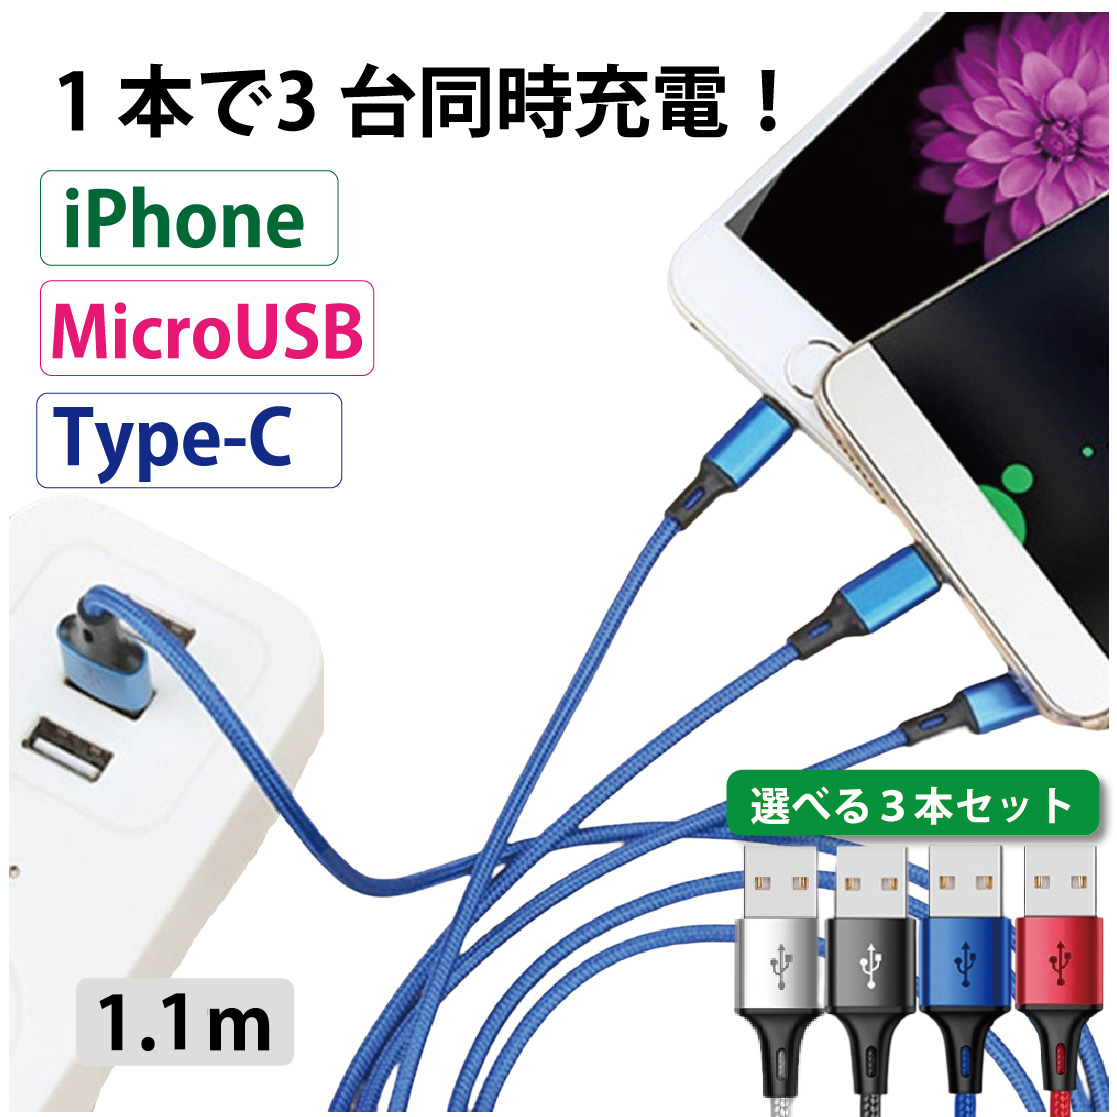 3in1 lightning 充電ケーブル 急速充電 1.1m 3台同時 3本セット 充電 USB タイプC iPhone microUSB type-C  iPhone iPad Android MacBook タブレット 送料無料